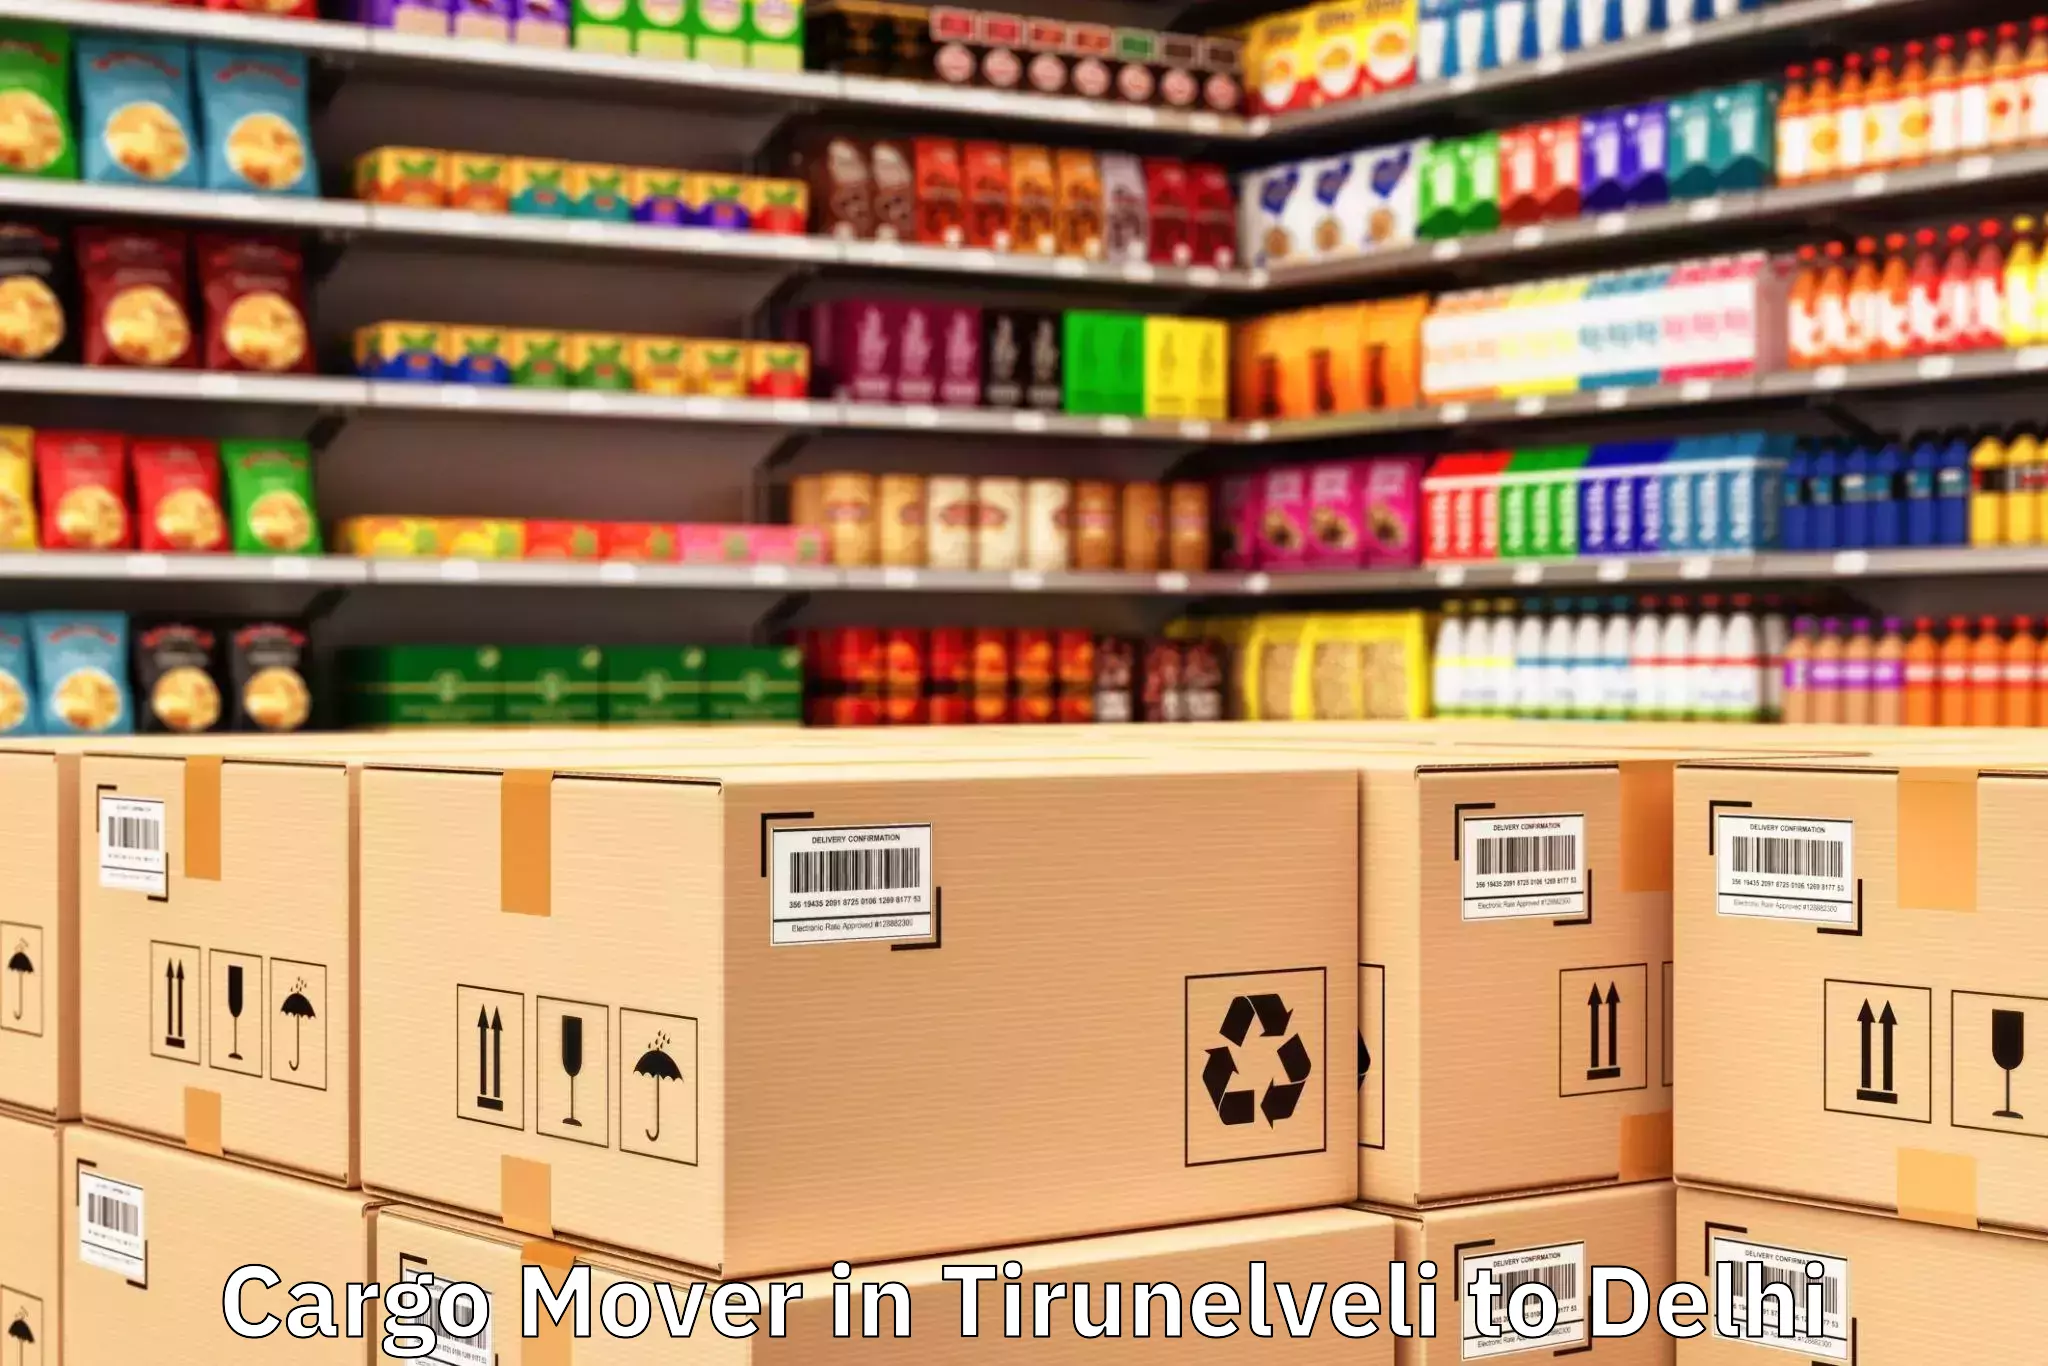 Leading Tirunelveli to Ansal Crown Plaza Mall Cargo Mover Provider